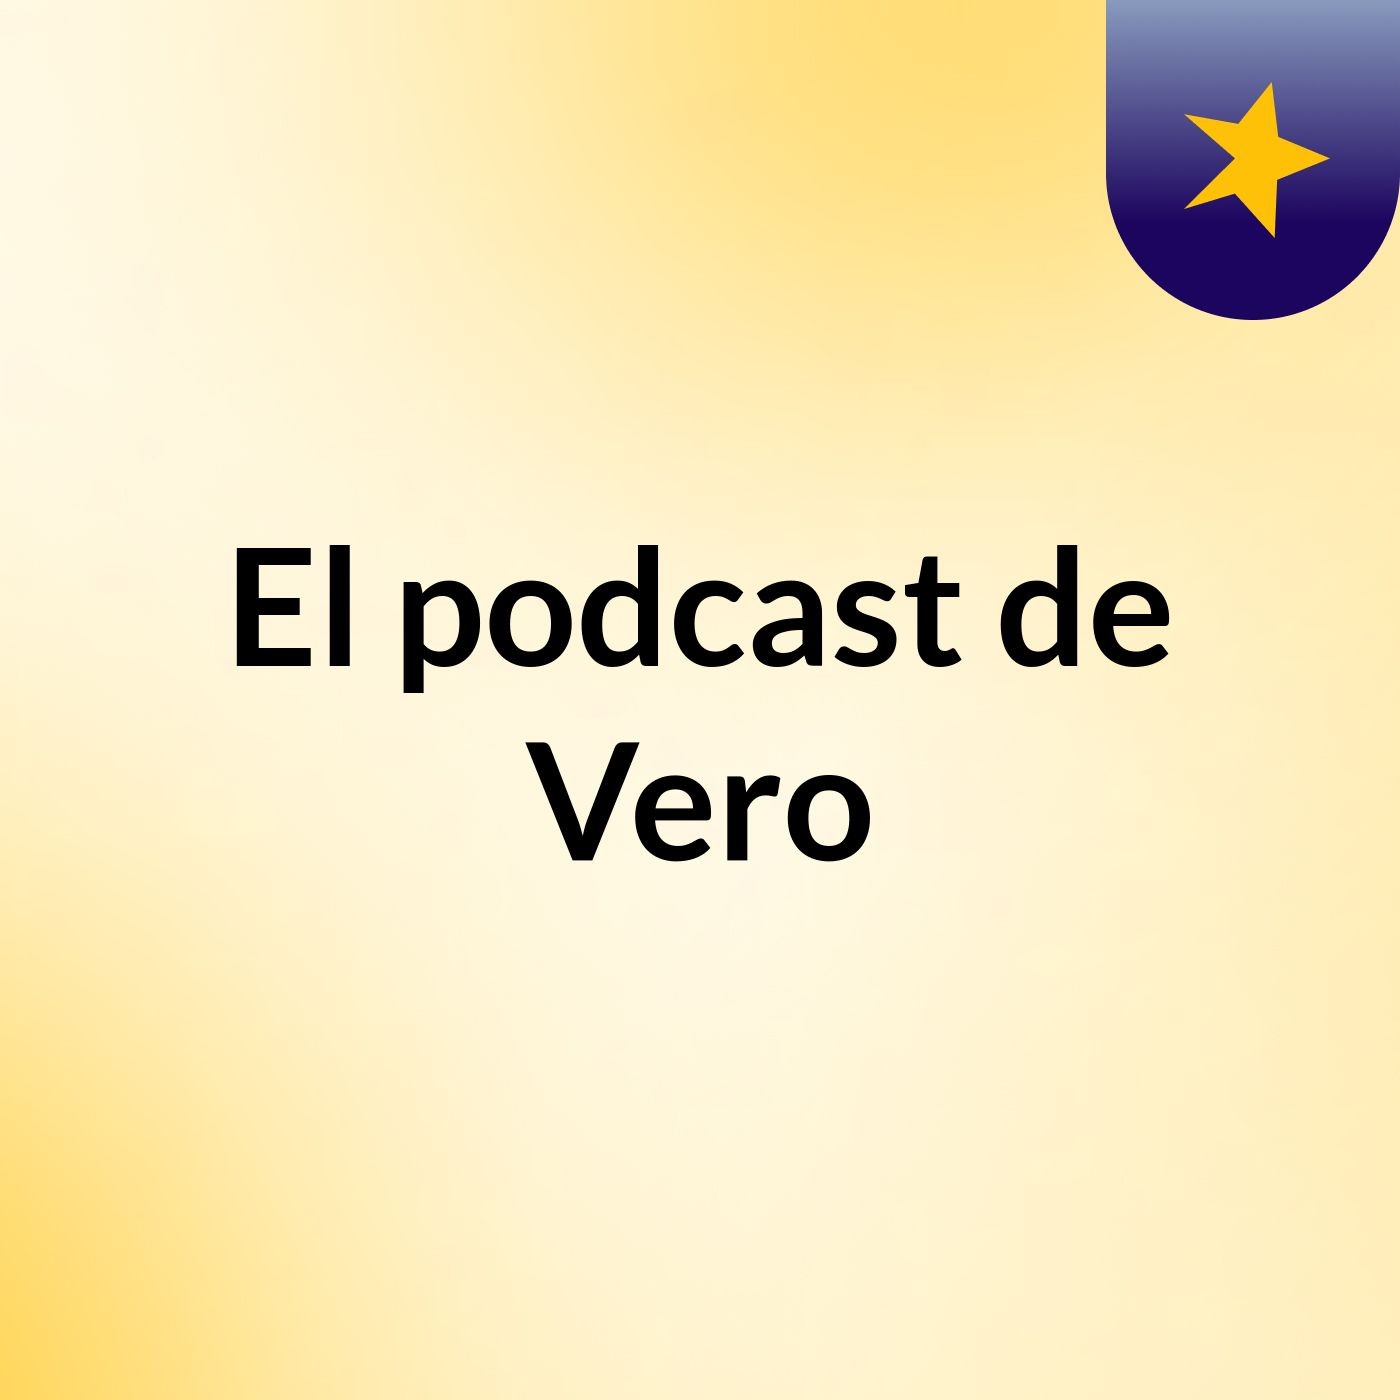 El podcast de Vero